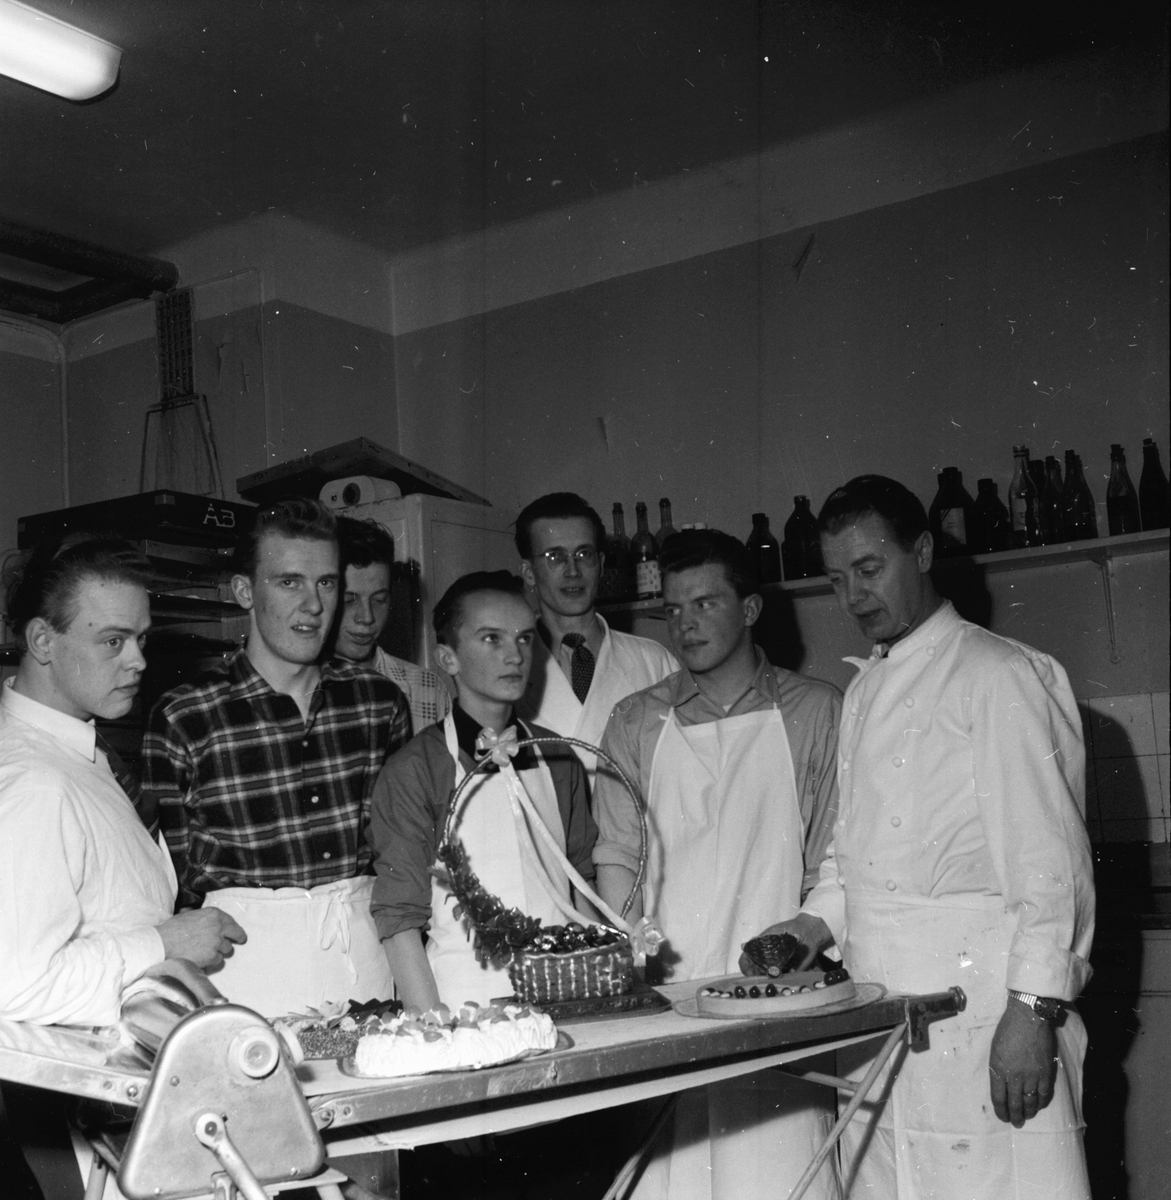 Konditorskurs i Bollnäs
14/2 1958